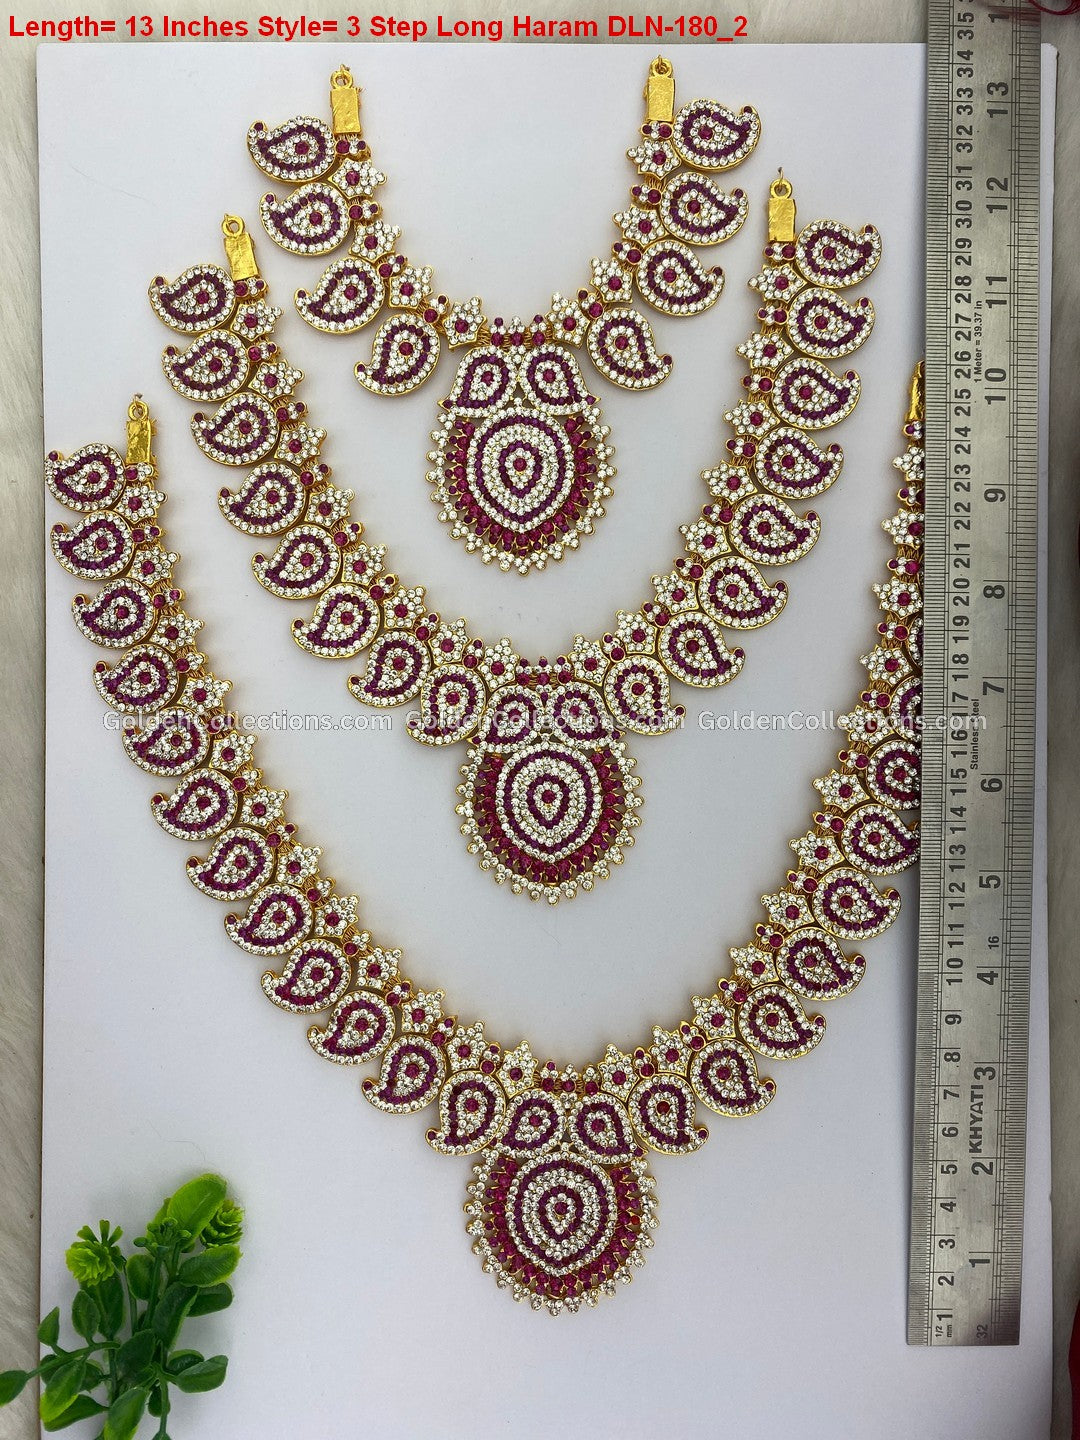 Traditional Goddess Lakshmi Jewellery - DLN-180 2